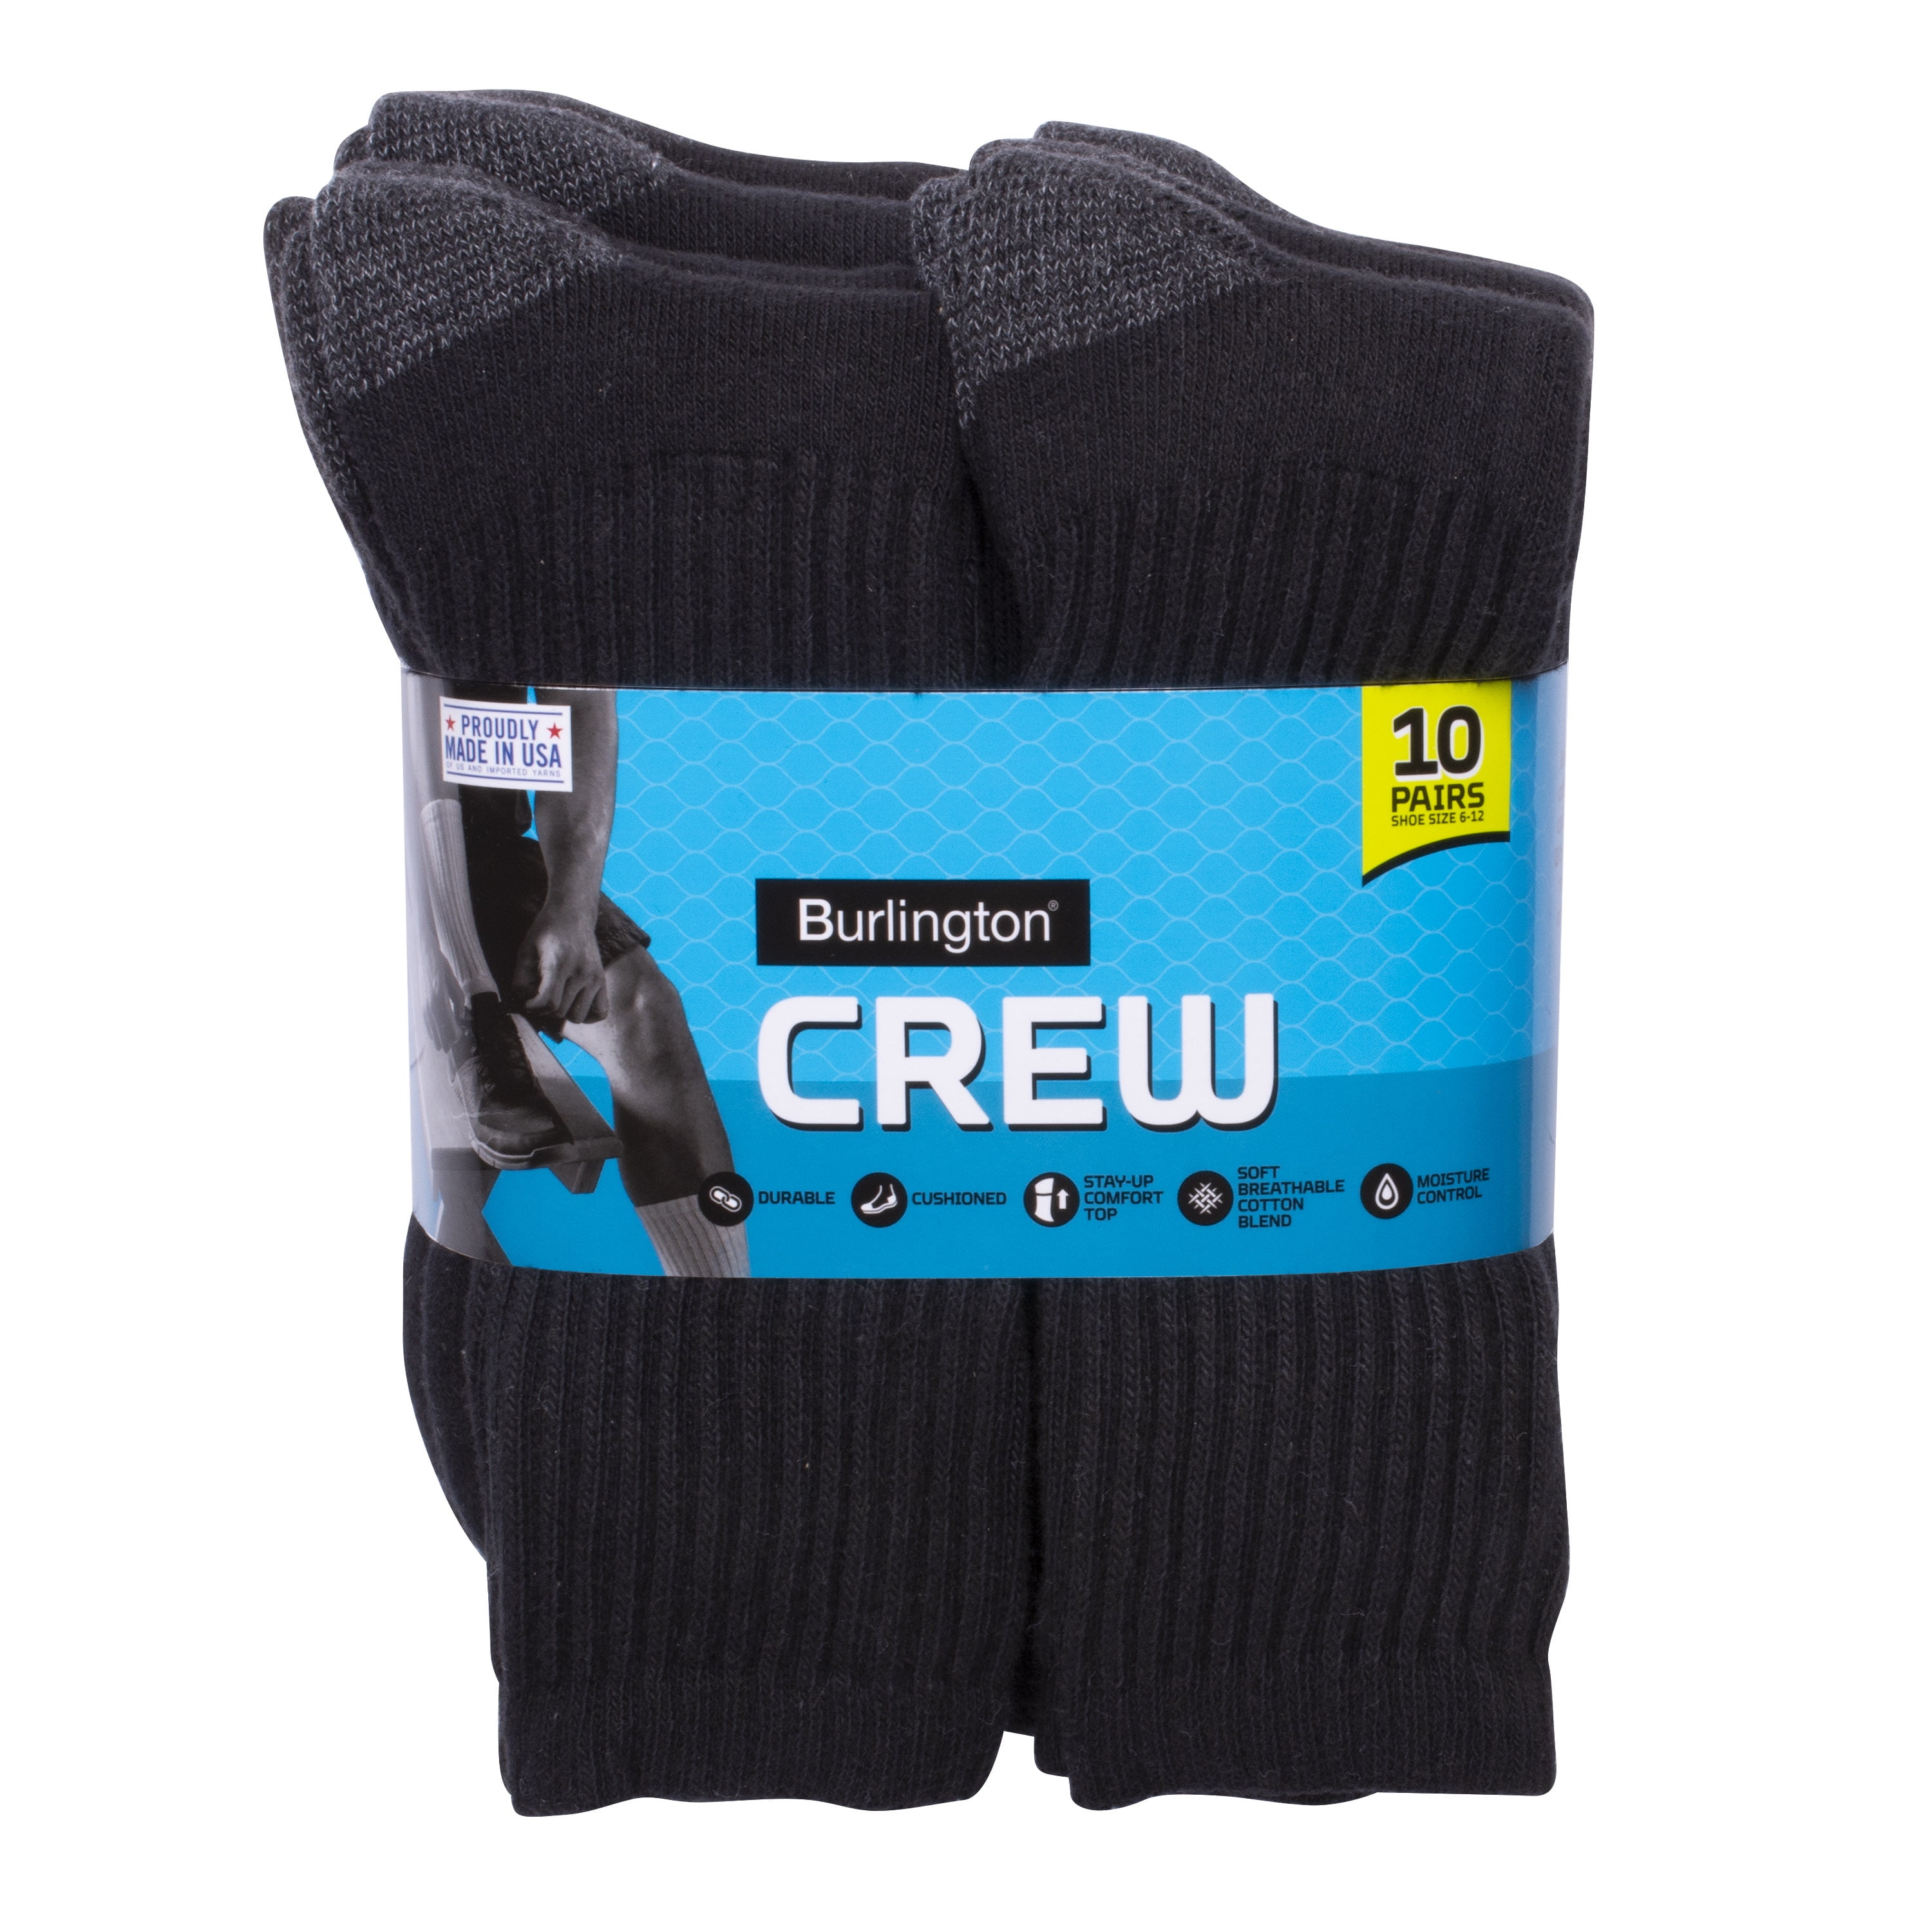 10-Pack Burlington Comfort Power Mens Cotton Crew Socks